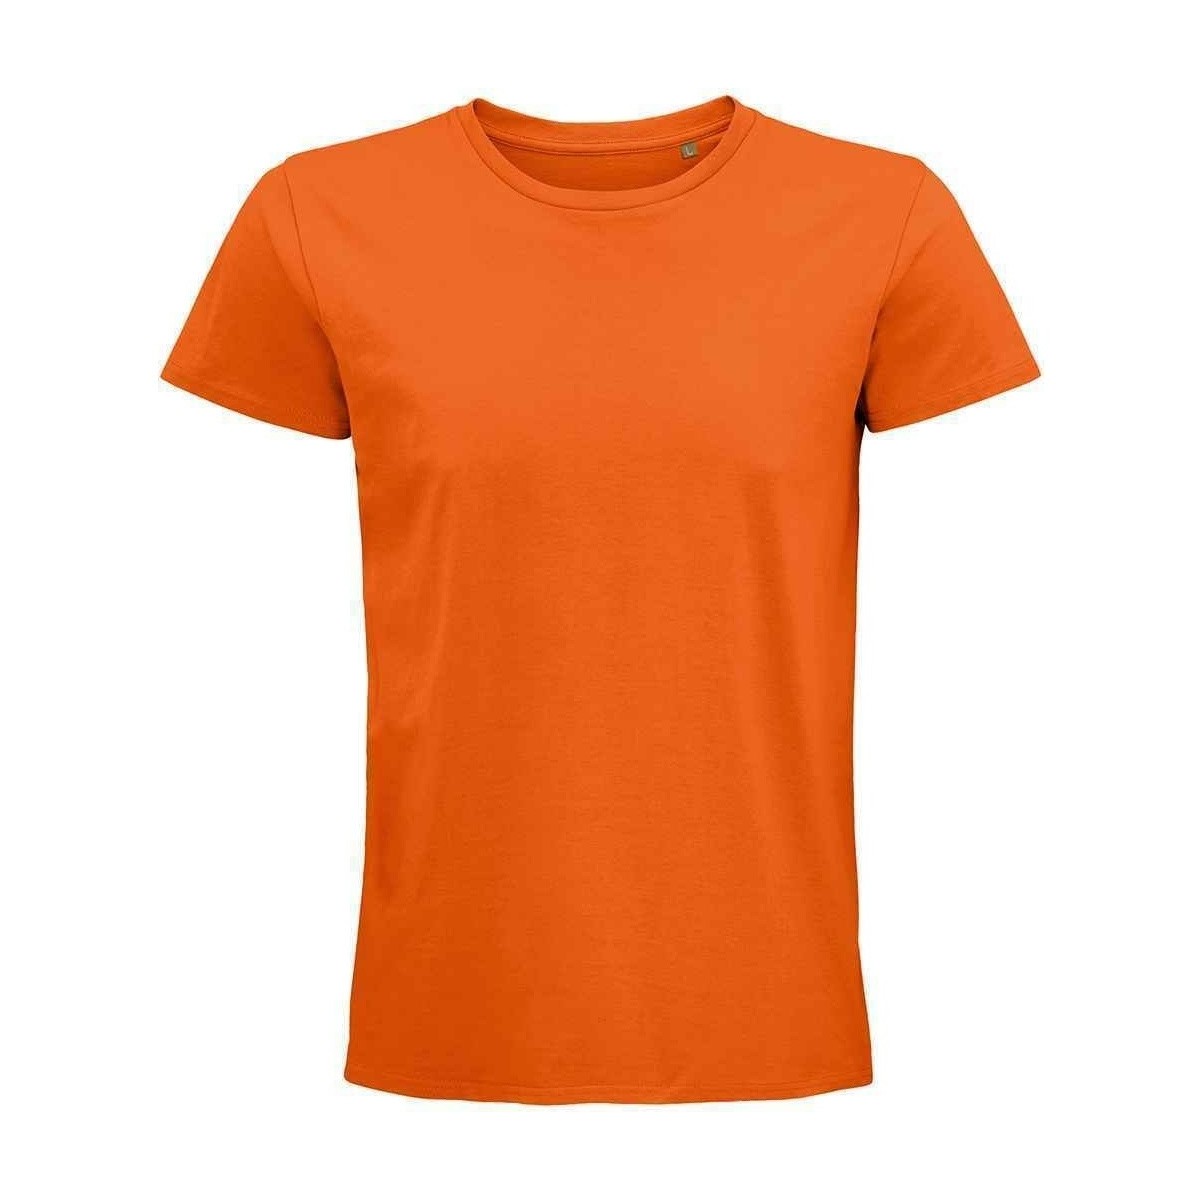 textil Camisetas manga larga Sols Pioneer Naranja